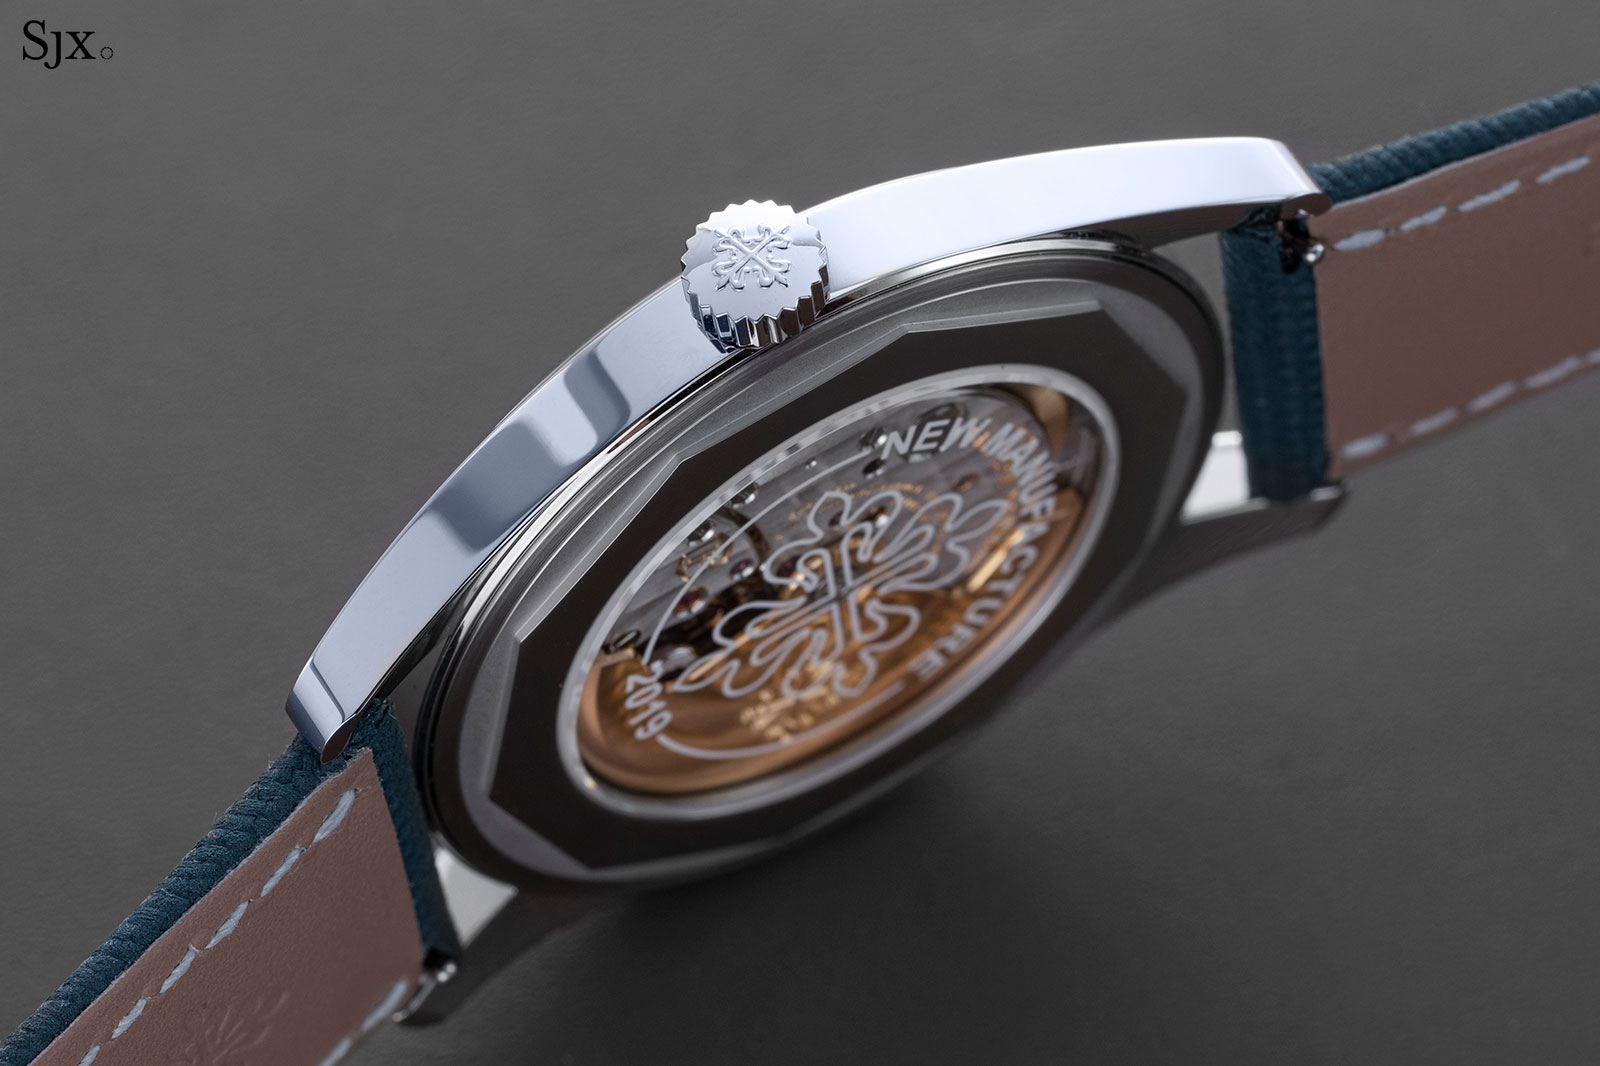 Up Close Patek Philippe Calatrava Ref 6007a New Manufacture 19 Sjx Watches